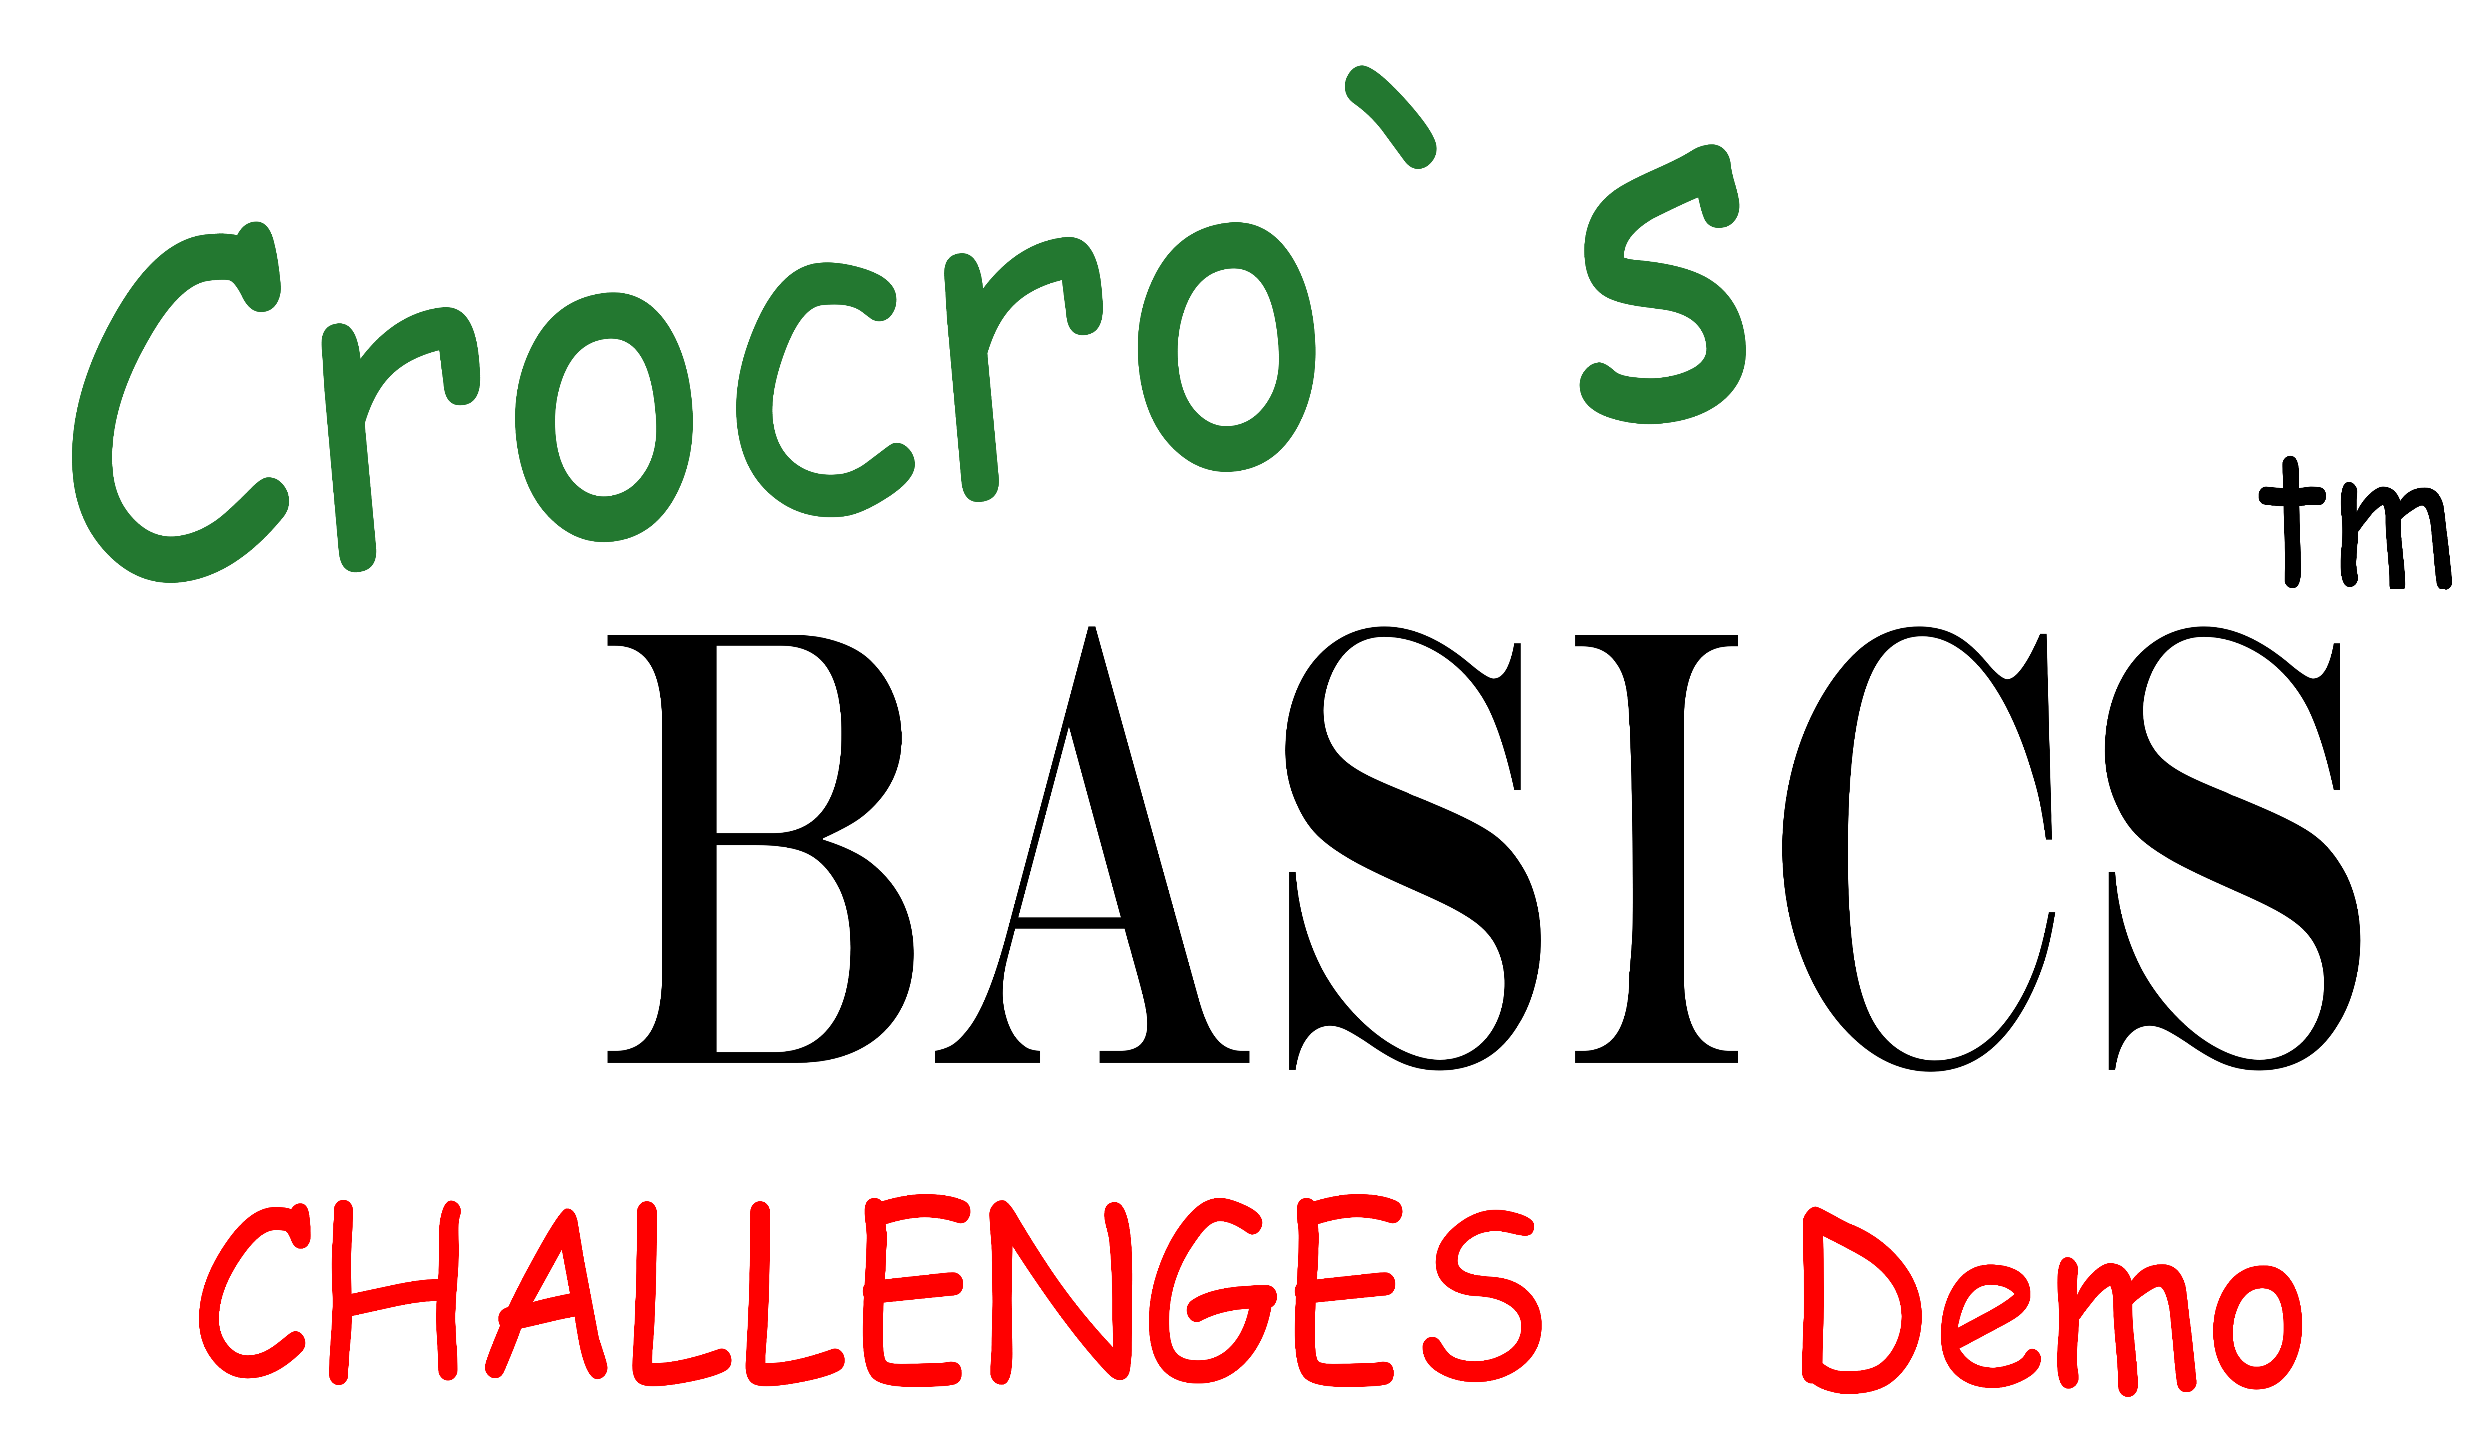 Crocro's Basics Challenges Demo (BETA VERSION)